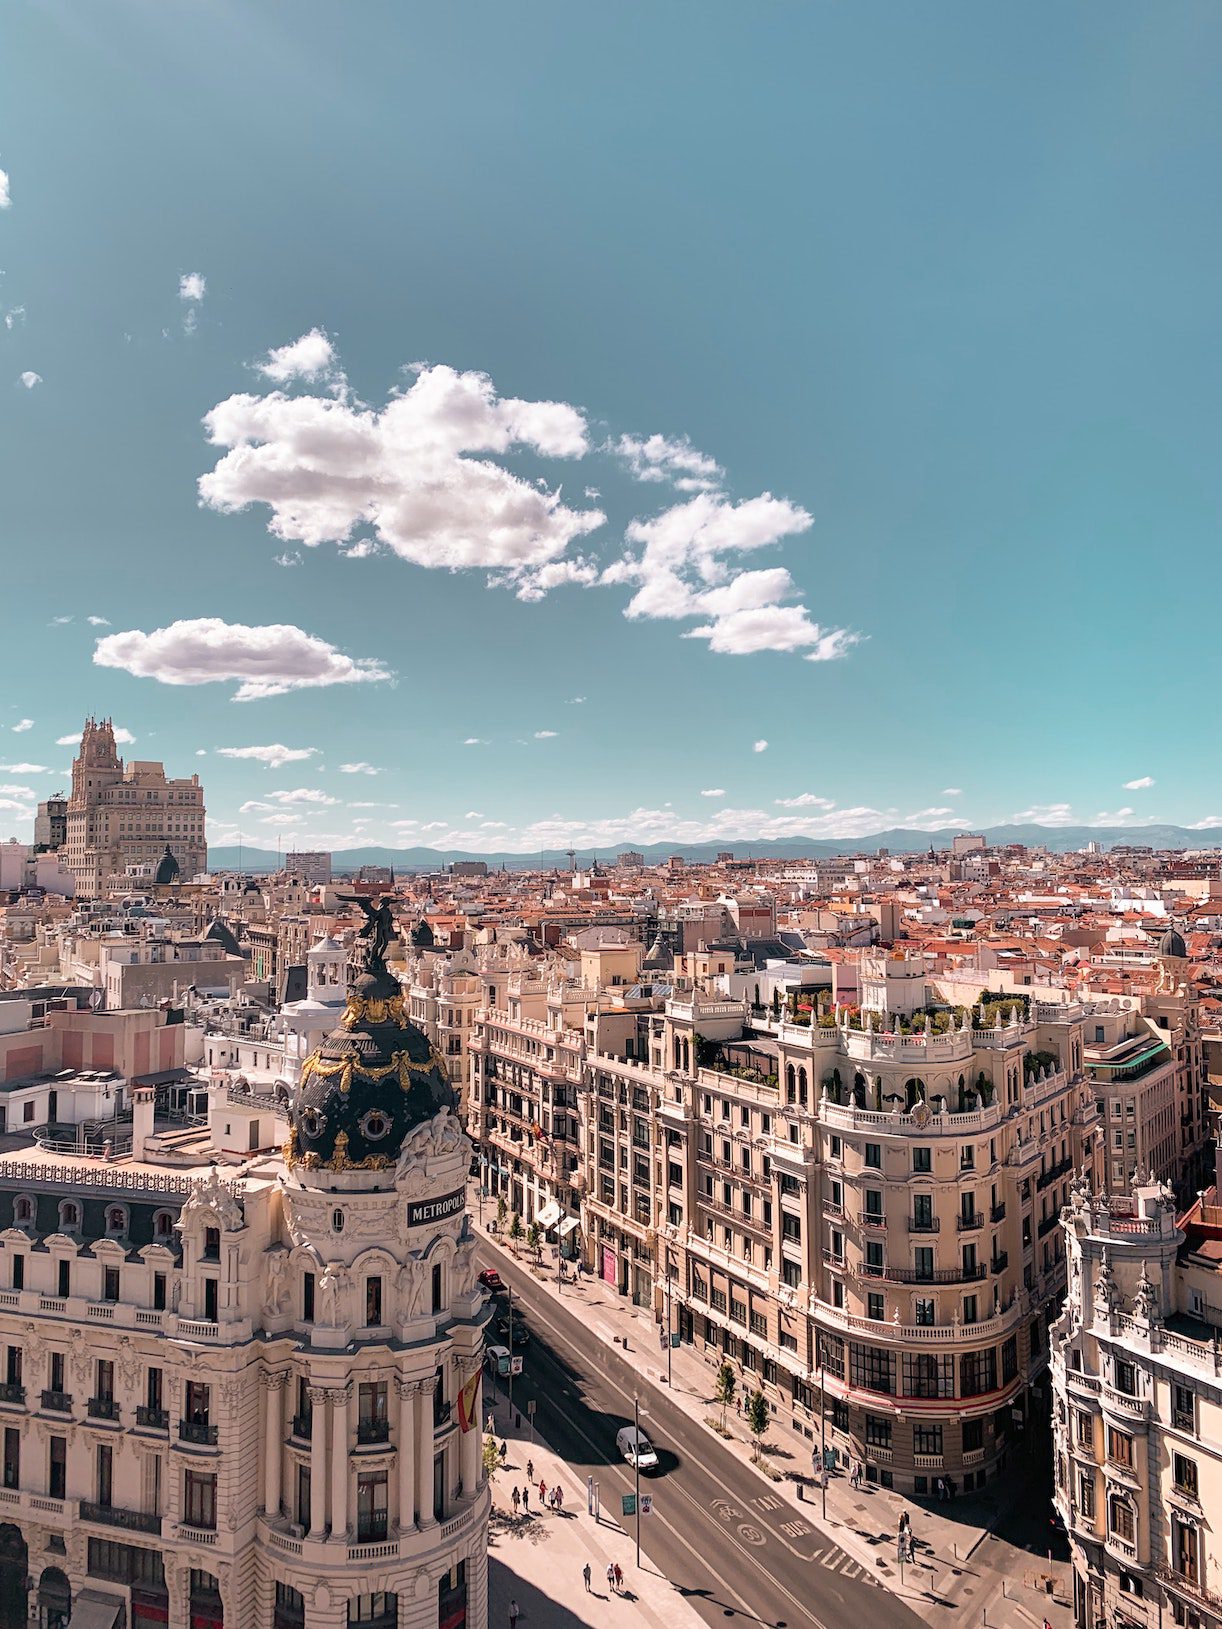 Madrid Spain Romantic City in Europe